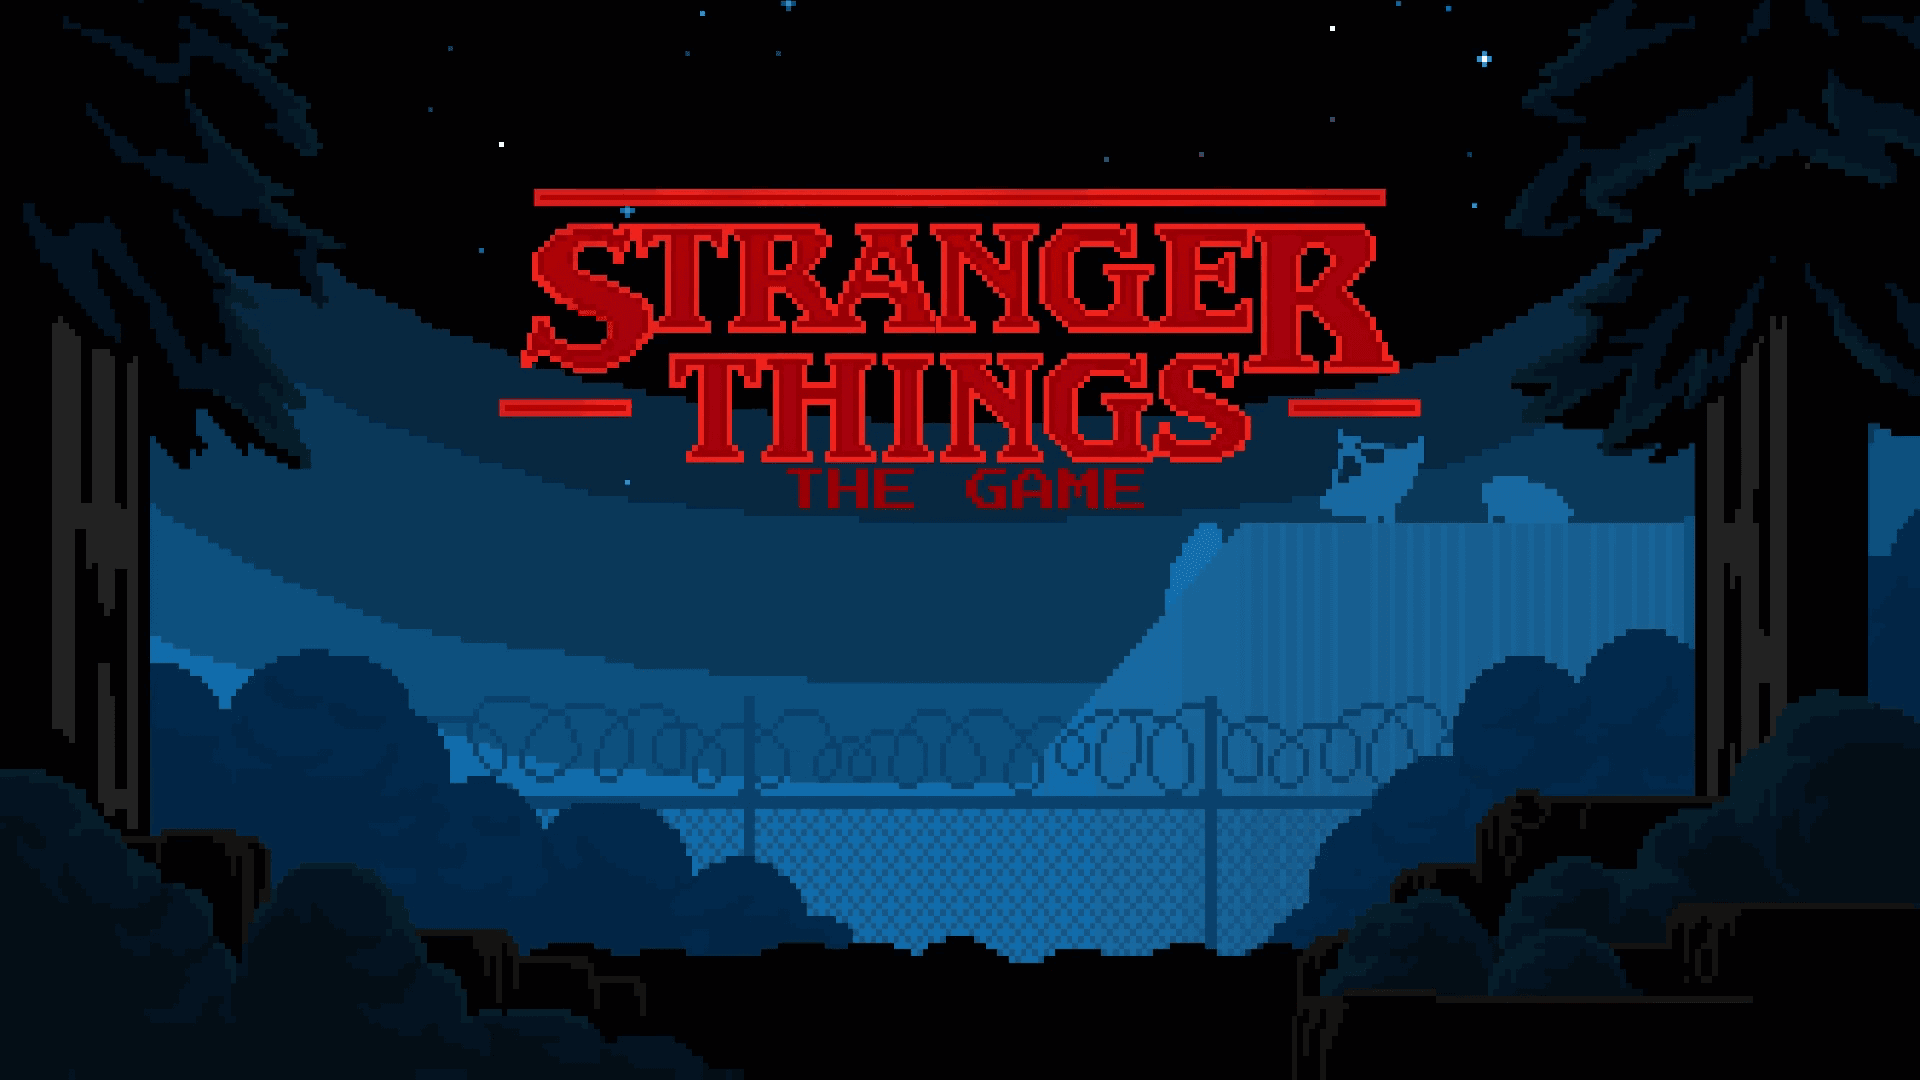 Stranger Things 3 The Game Pc Version Full Game Free - Stranger Things  Wallpaper 4k - 1920x1080 Wallpaper 